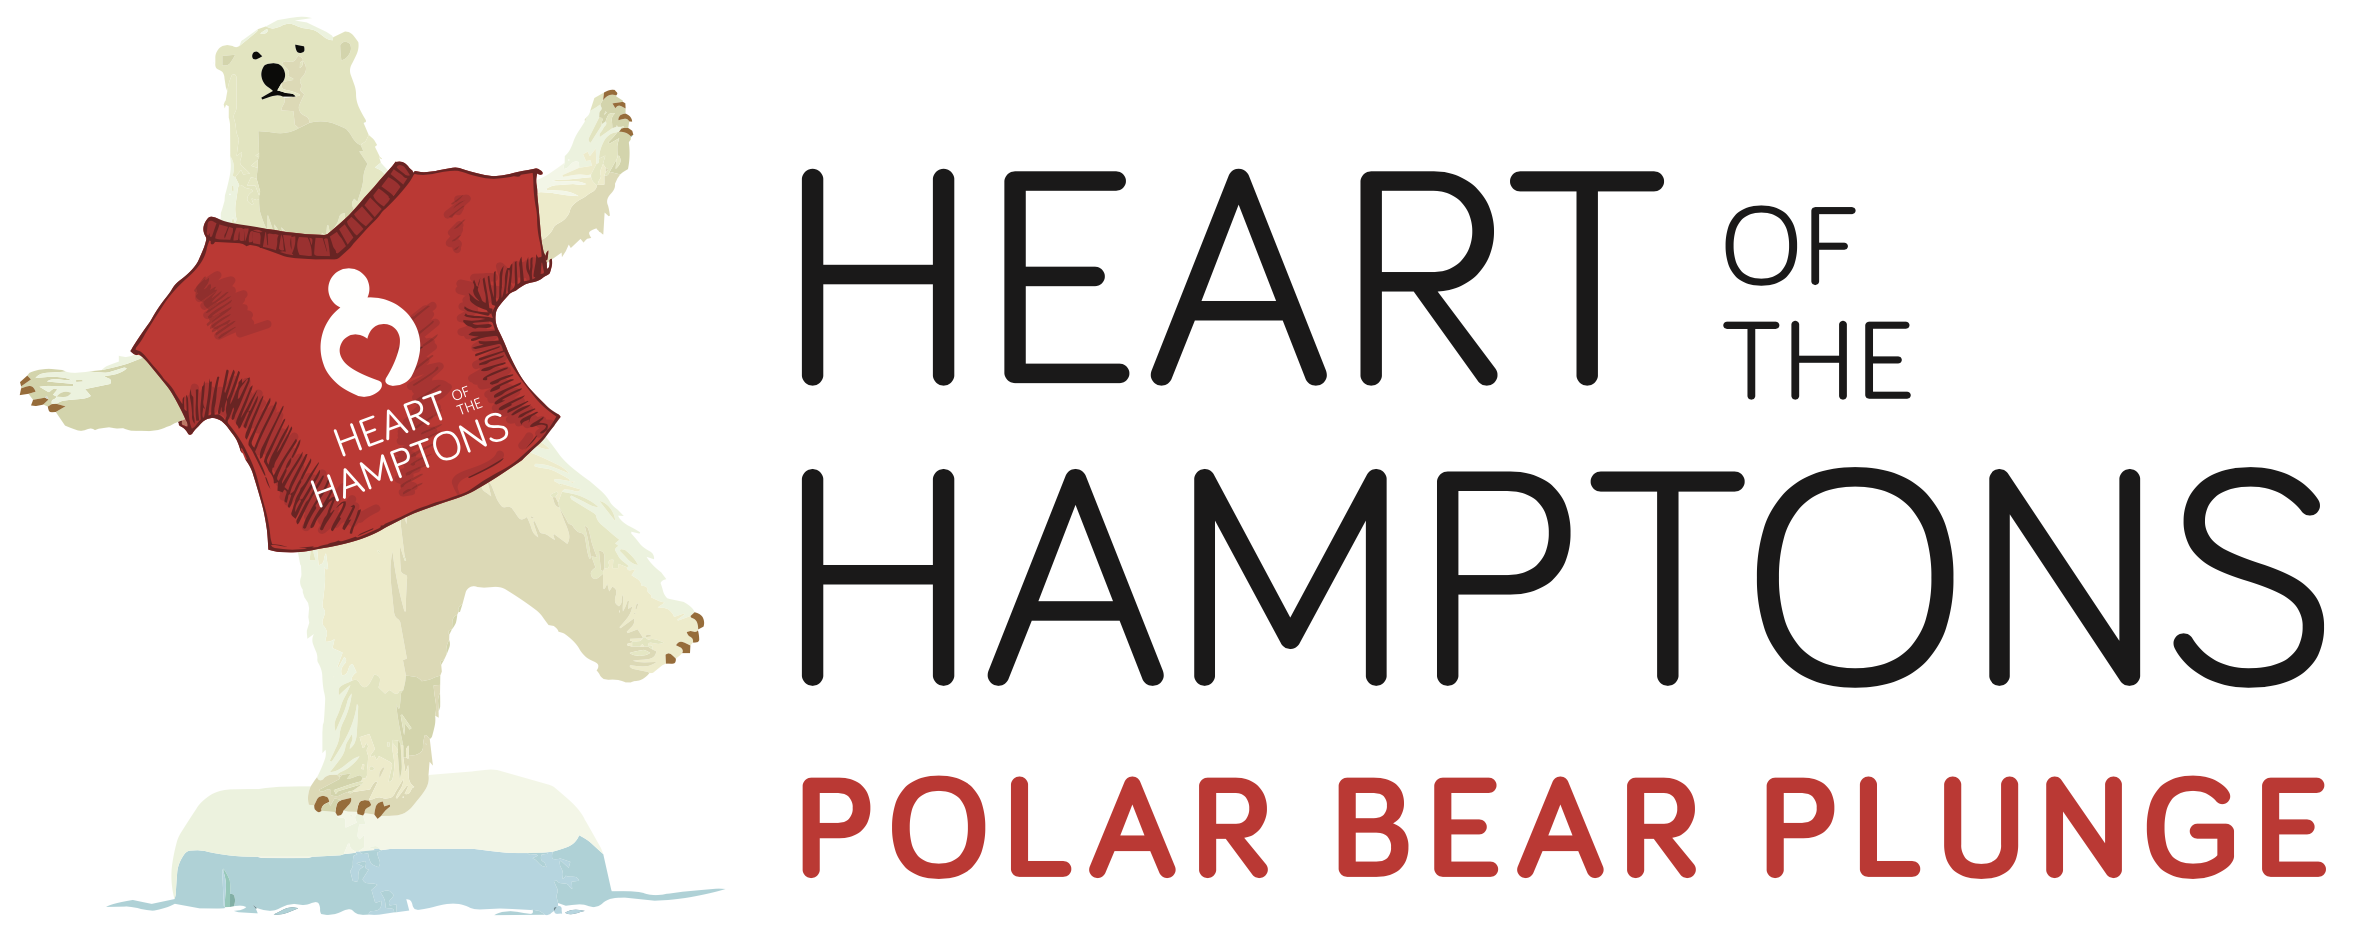 Heart of the hamptons polar bear plunge